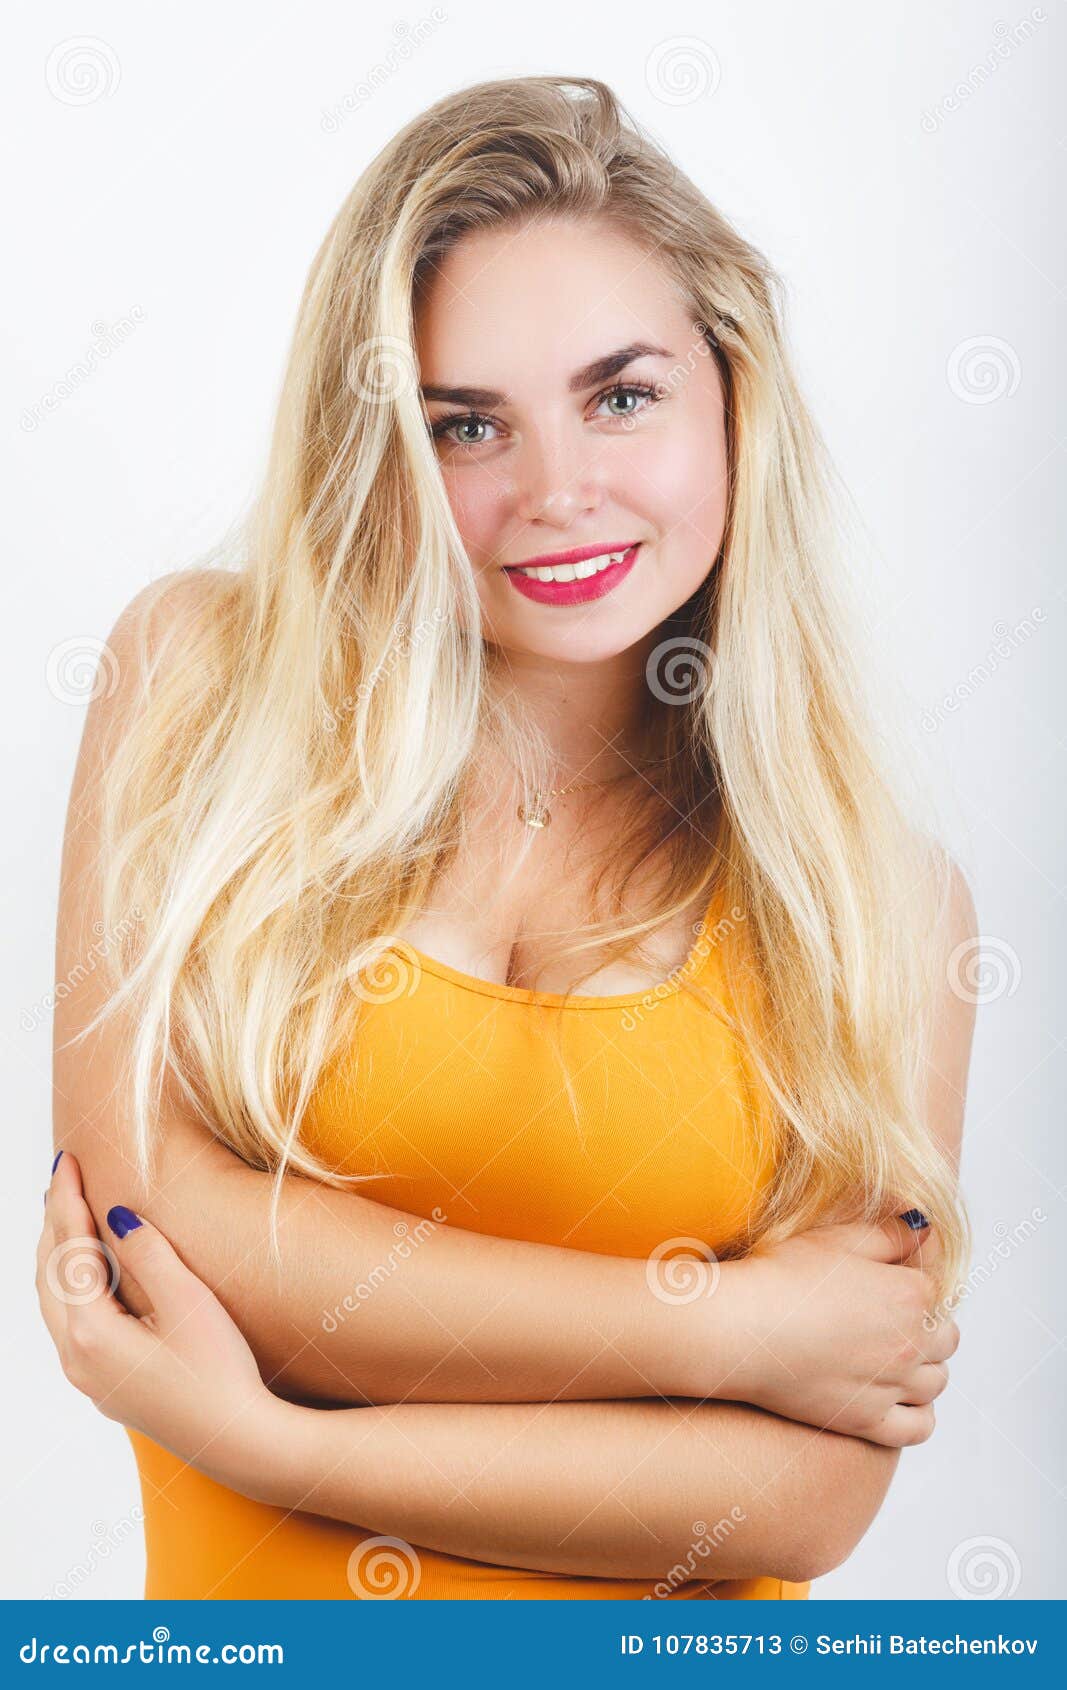 don richardson share big natural tits blonde beauty photos